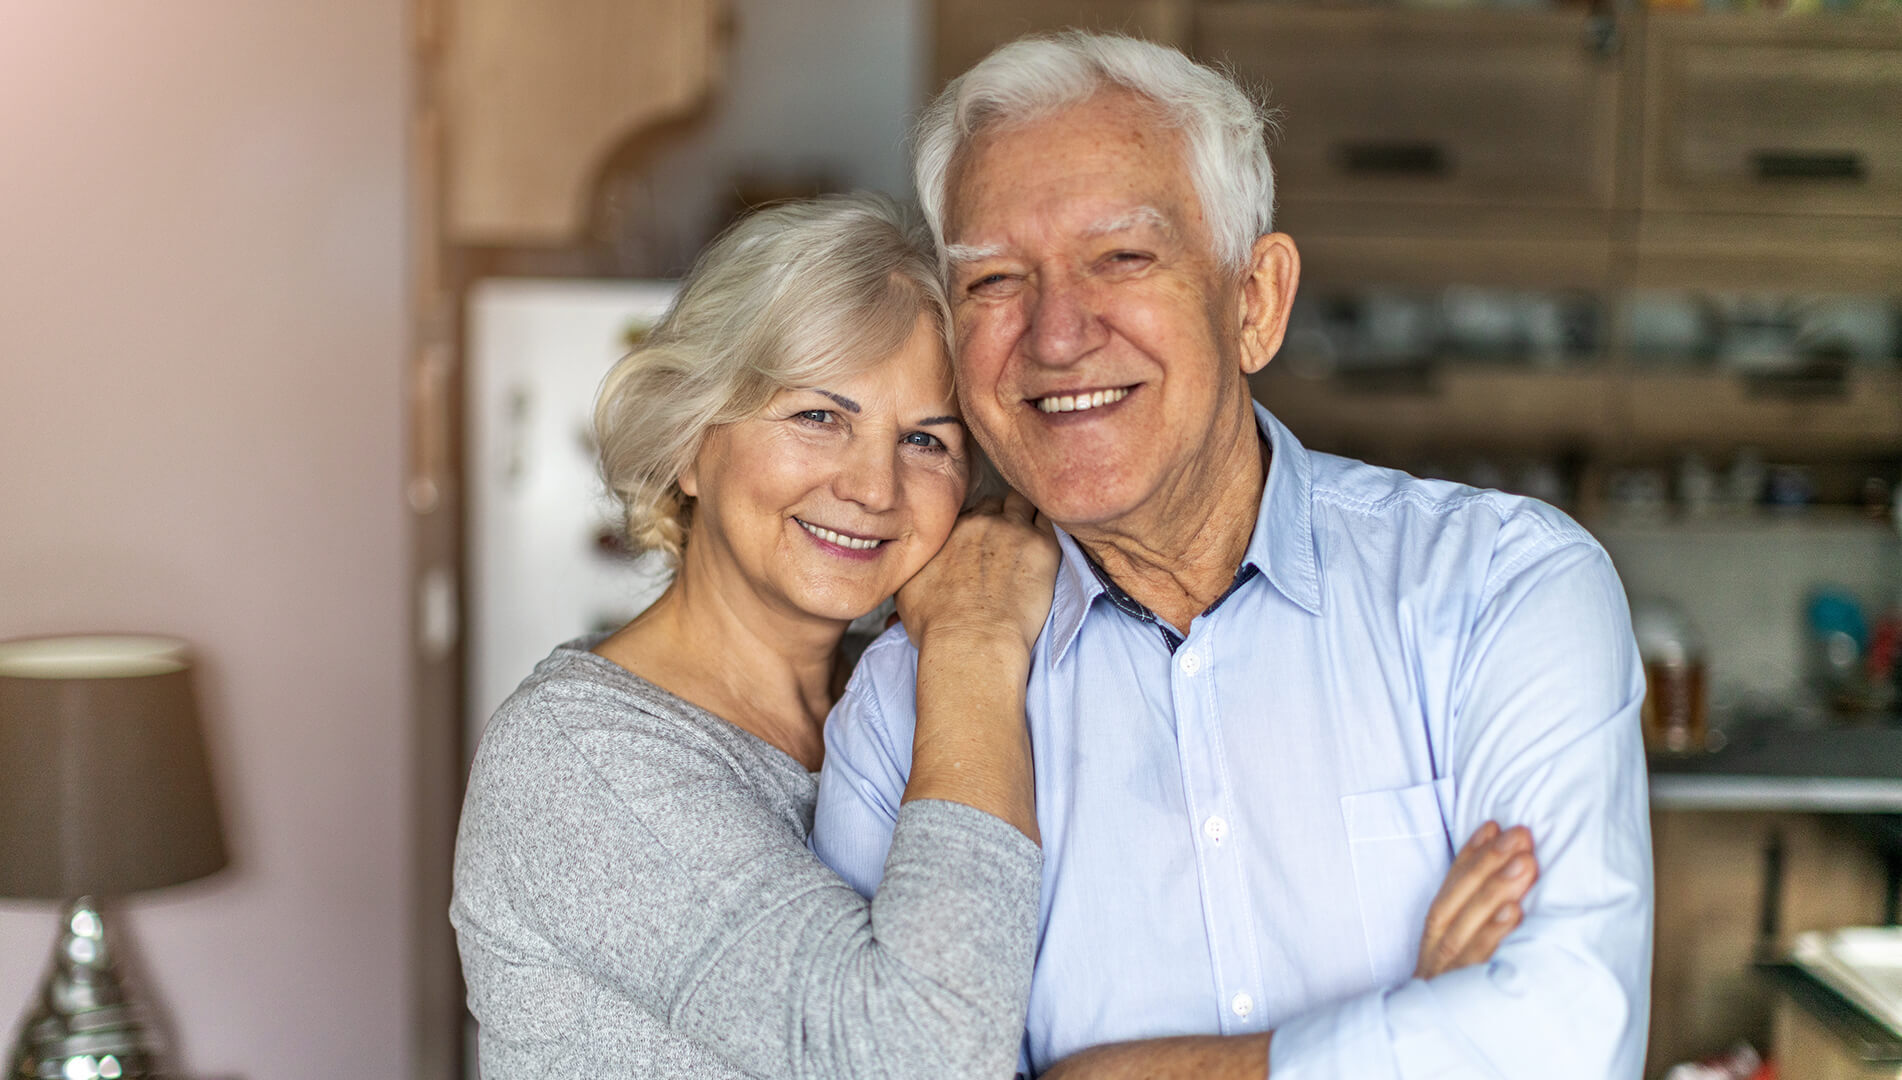 A happy elderly couple enjoying independent living for seniors